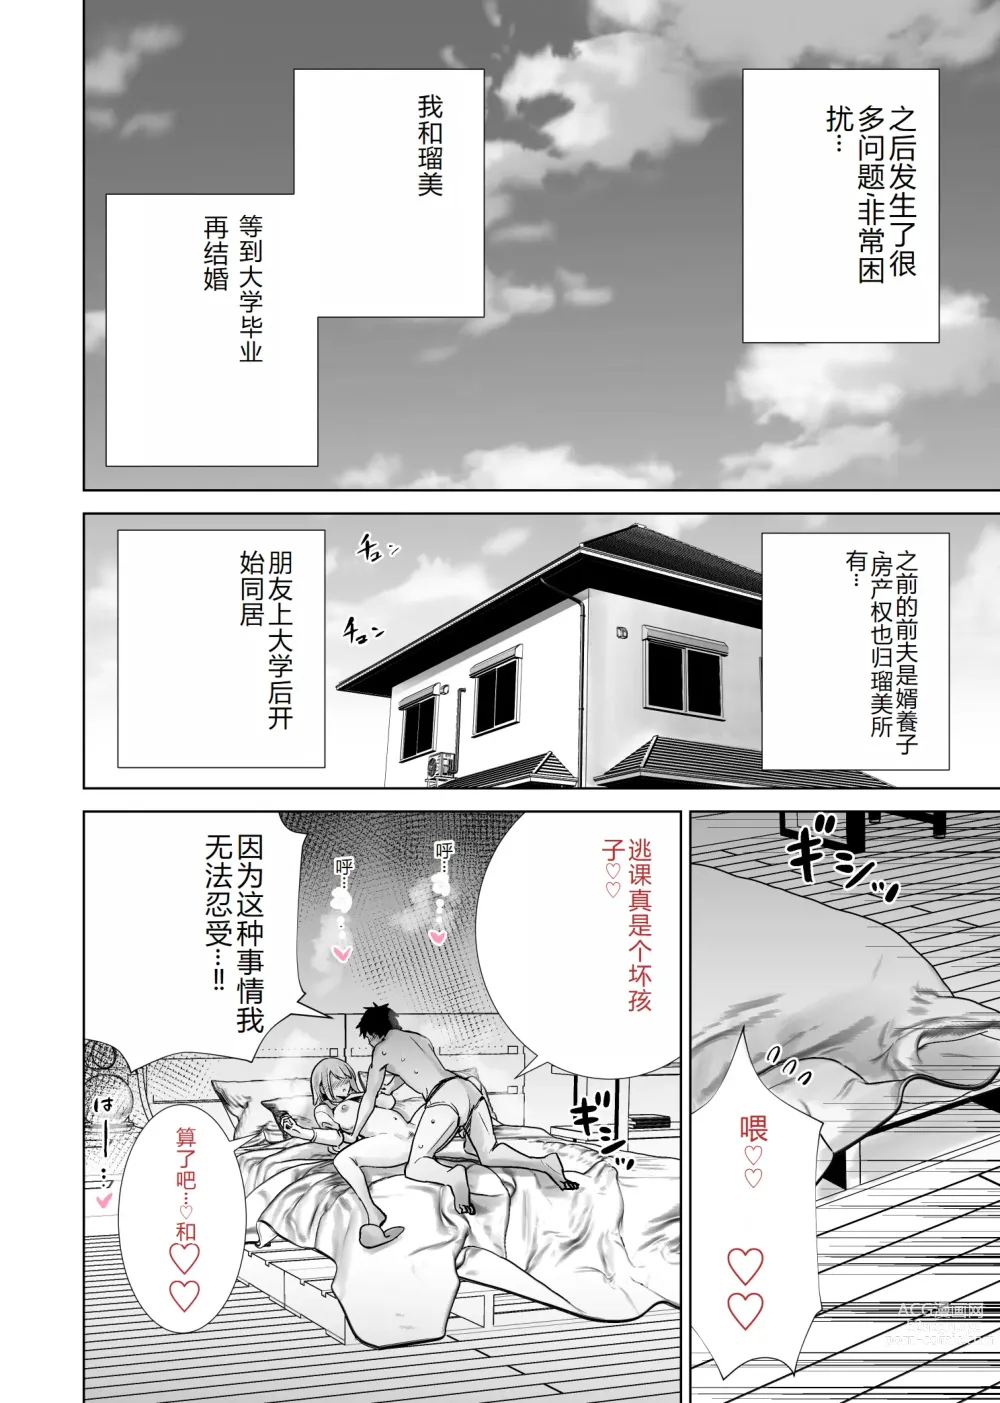 Page 36 of doujinshi Tomodachi no Mama ga Boku no Dekachin de Ikimakutta Sotsugyoushiki